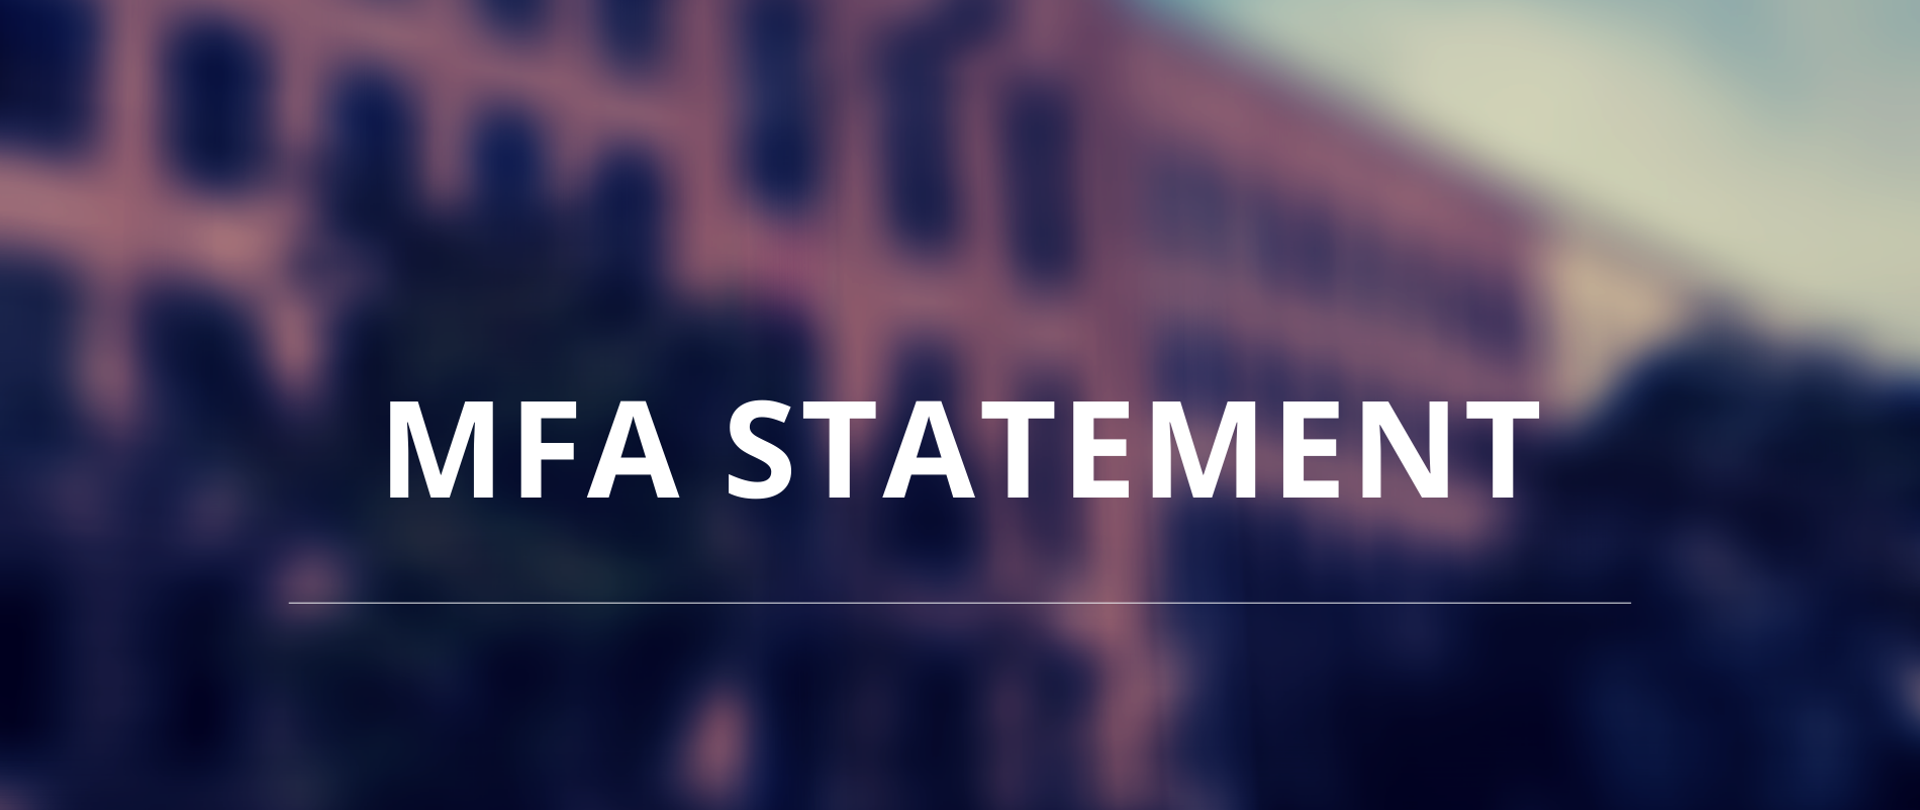 Statement MFA